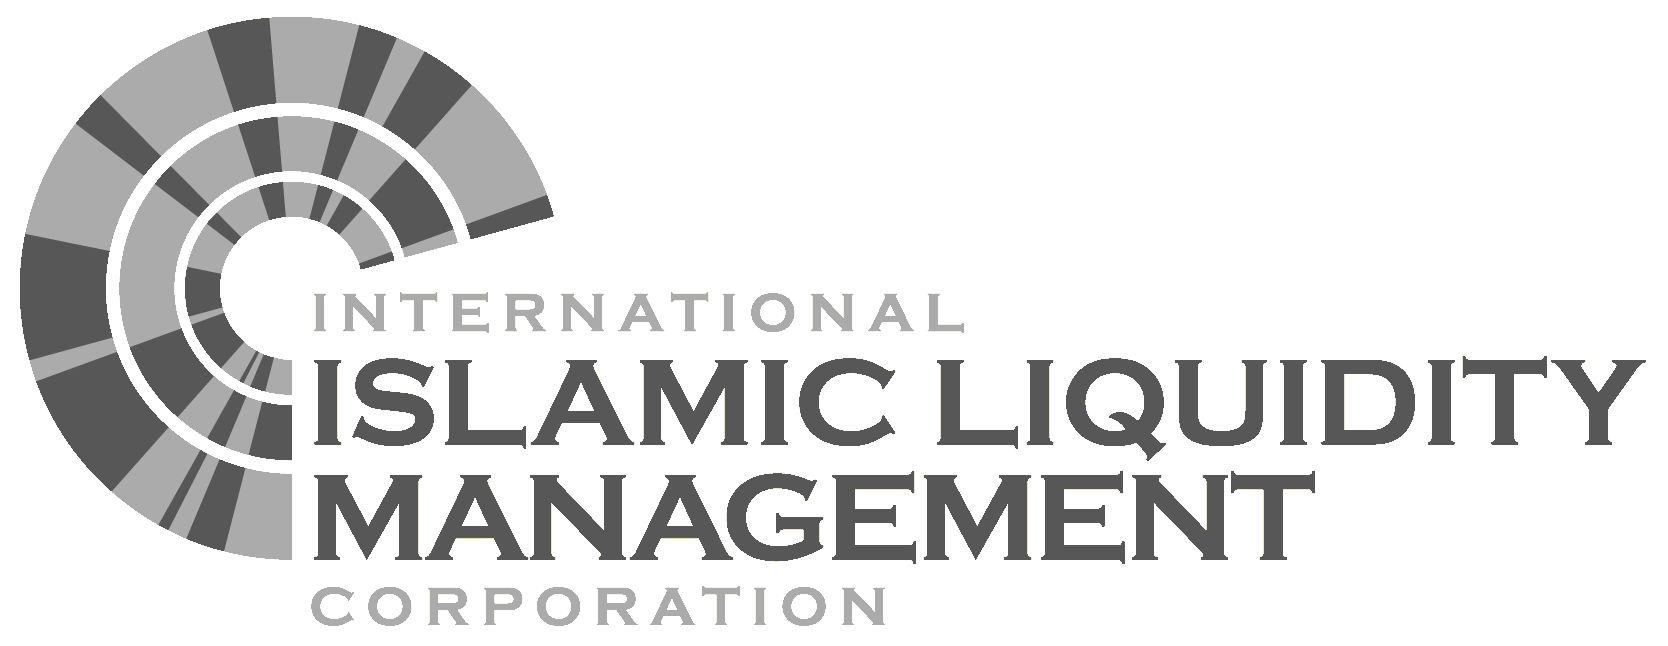 International Islamic Liquidity Management Corporation_logo_g